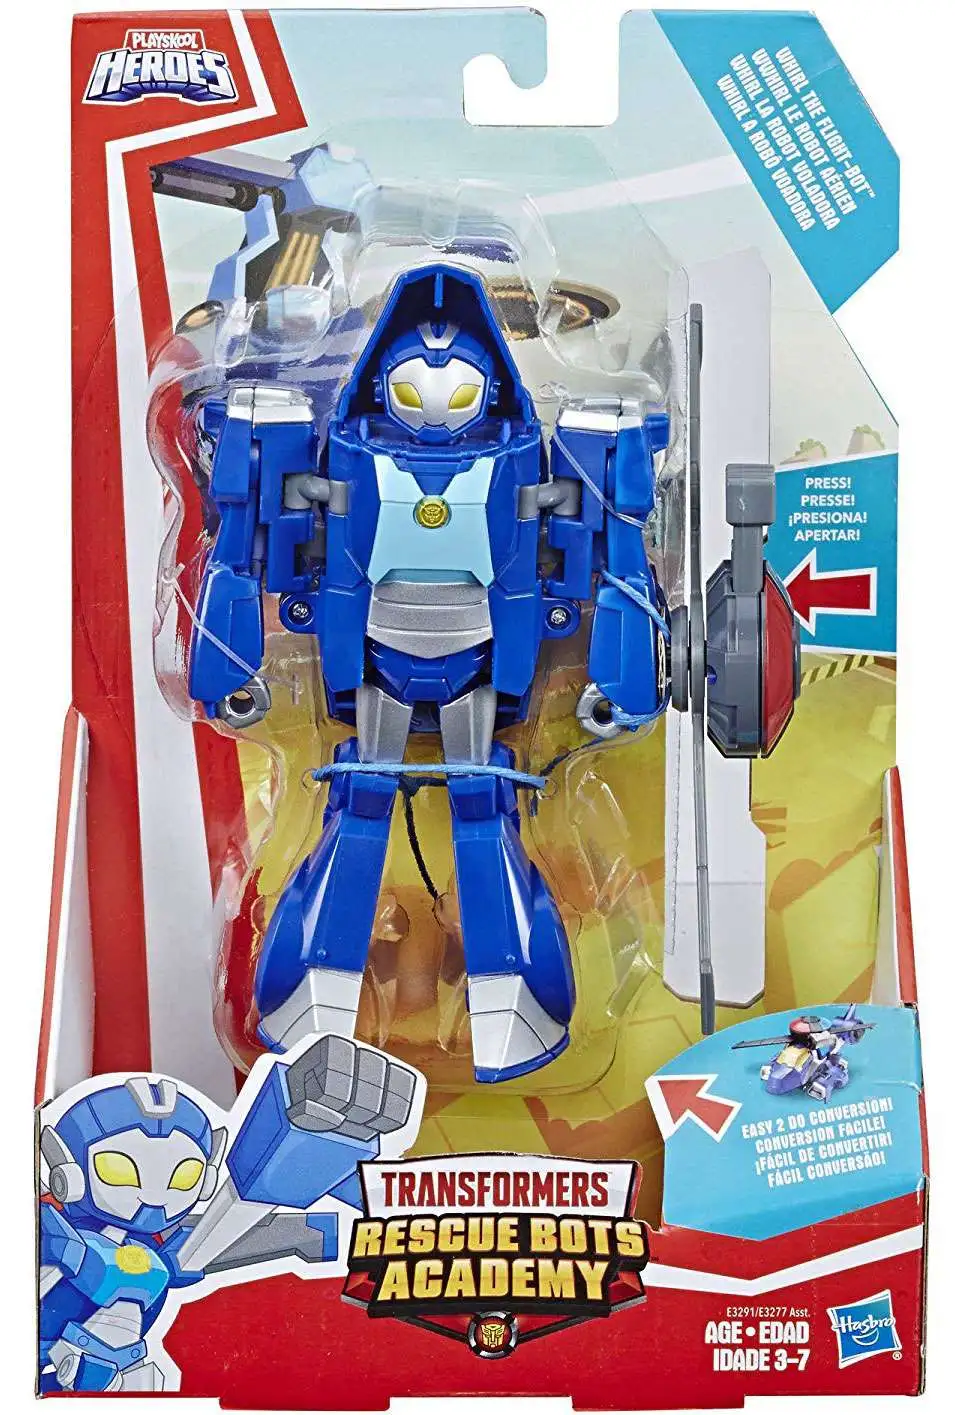 Playskool Transformers Rescue Bots Whirl the Flight Bot Brand new 